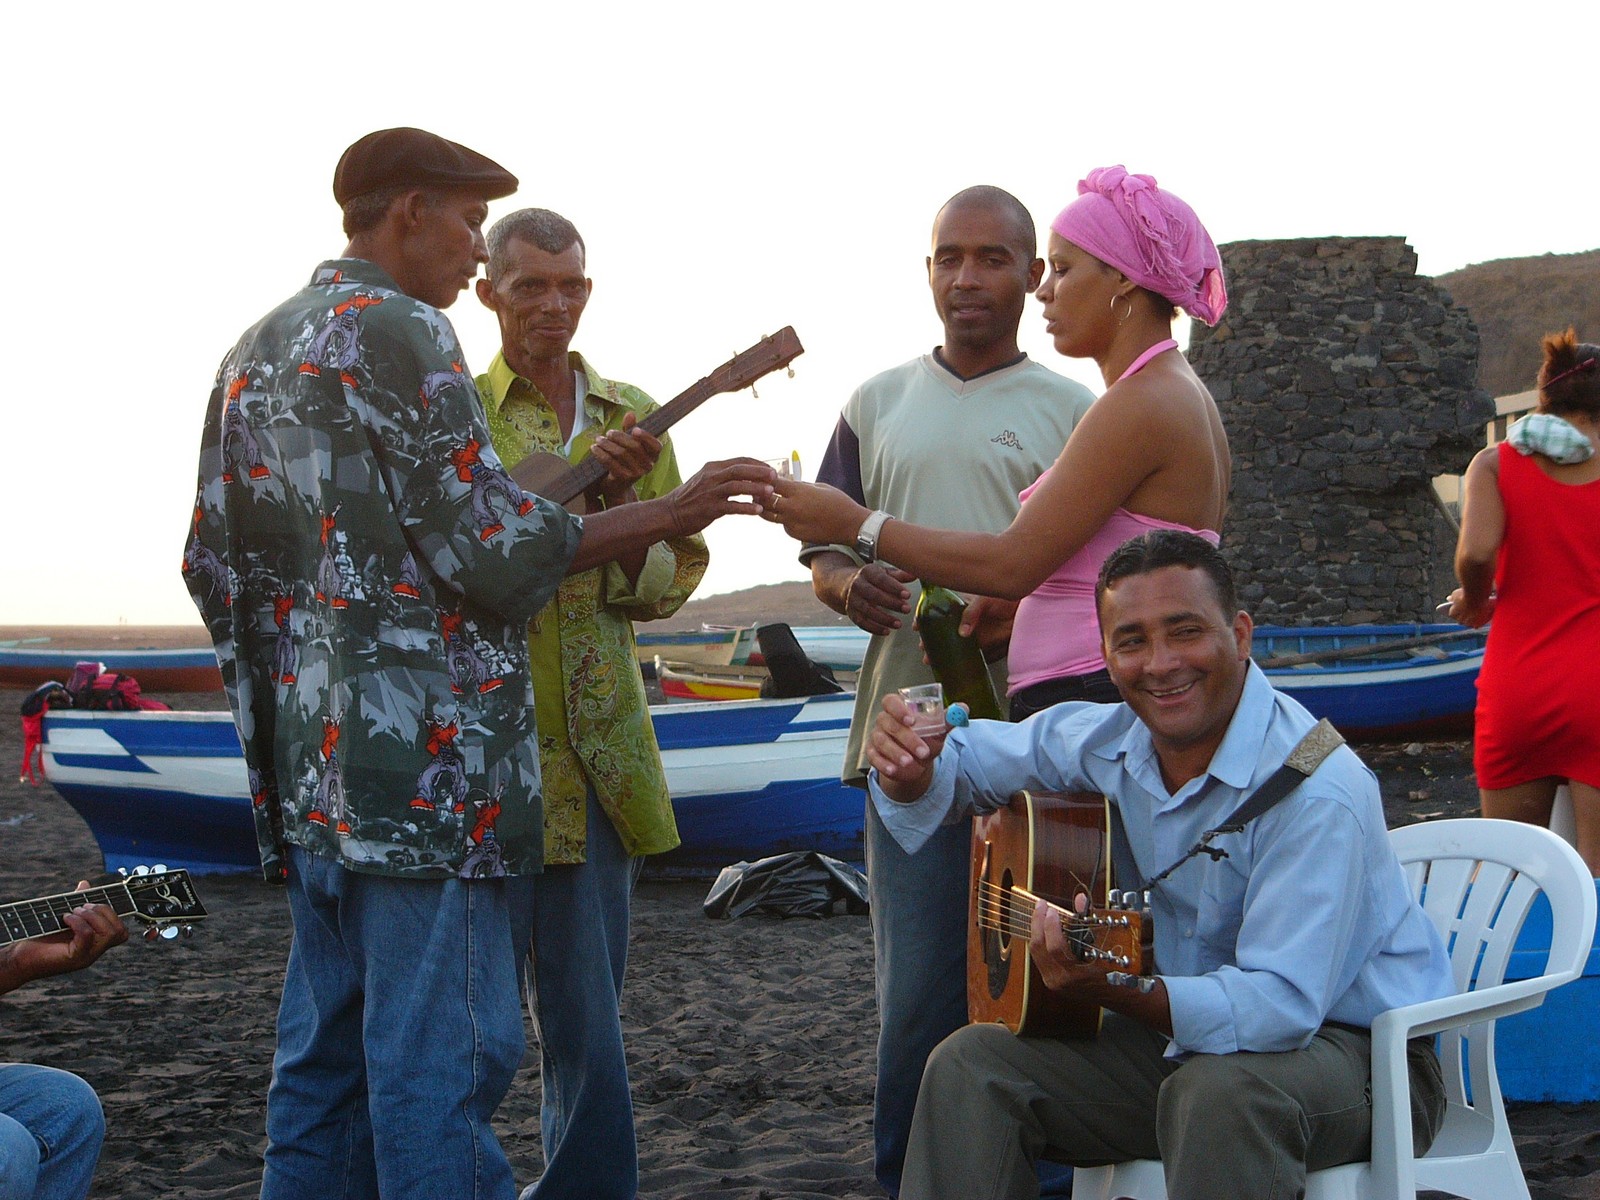 Livemusik am Strand auf den Kapverden - Lupe Reisen